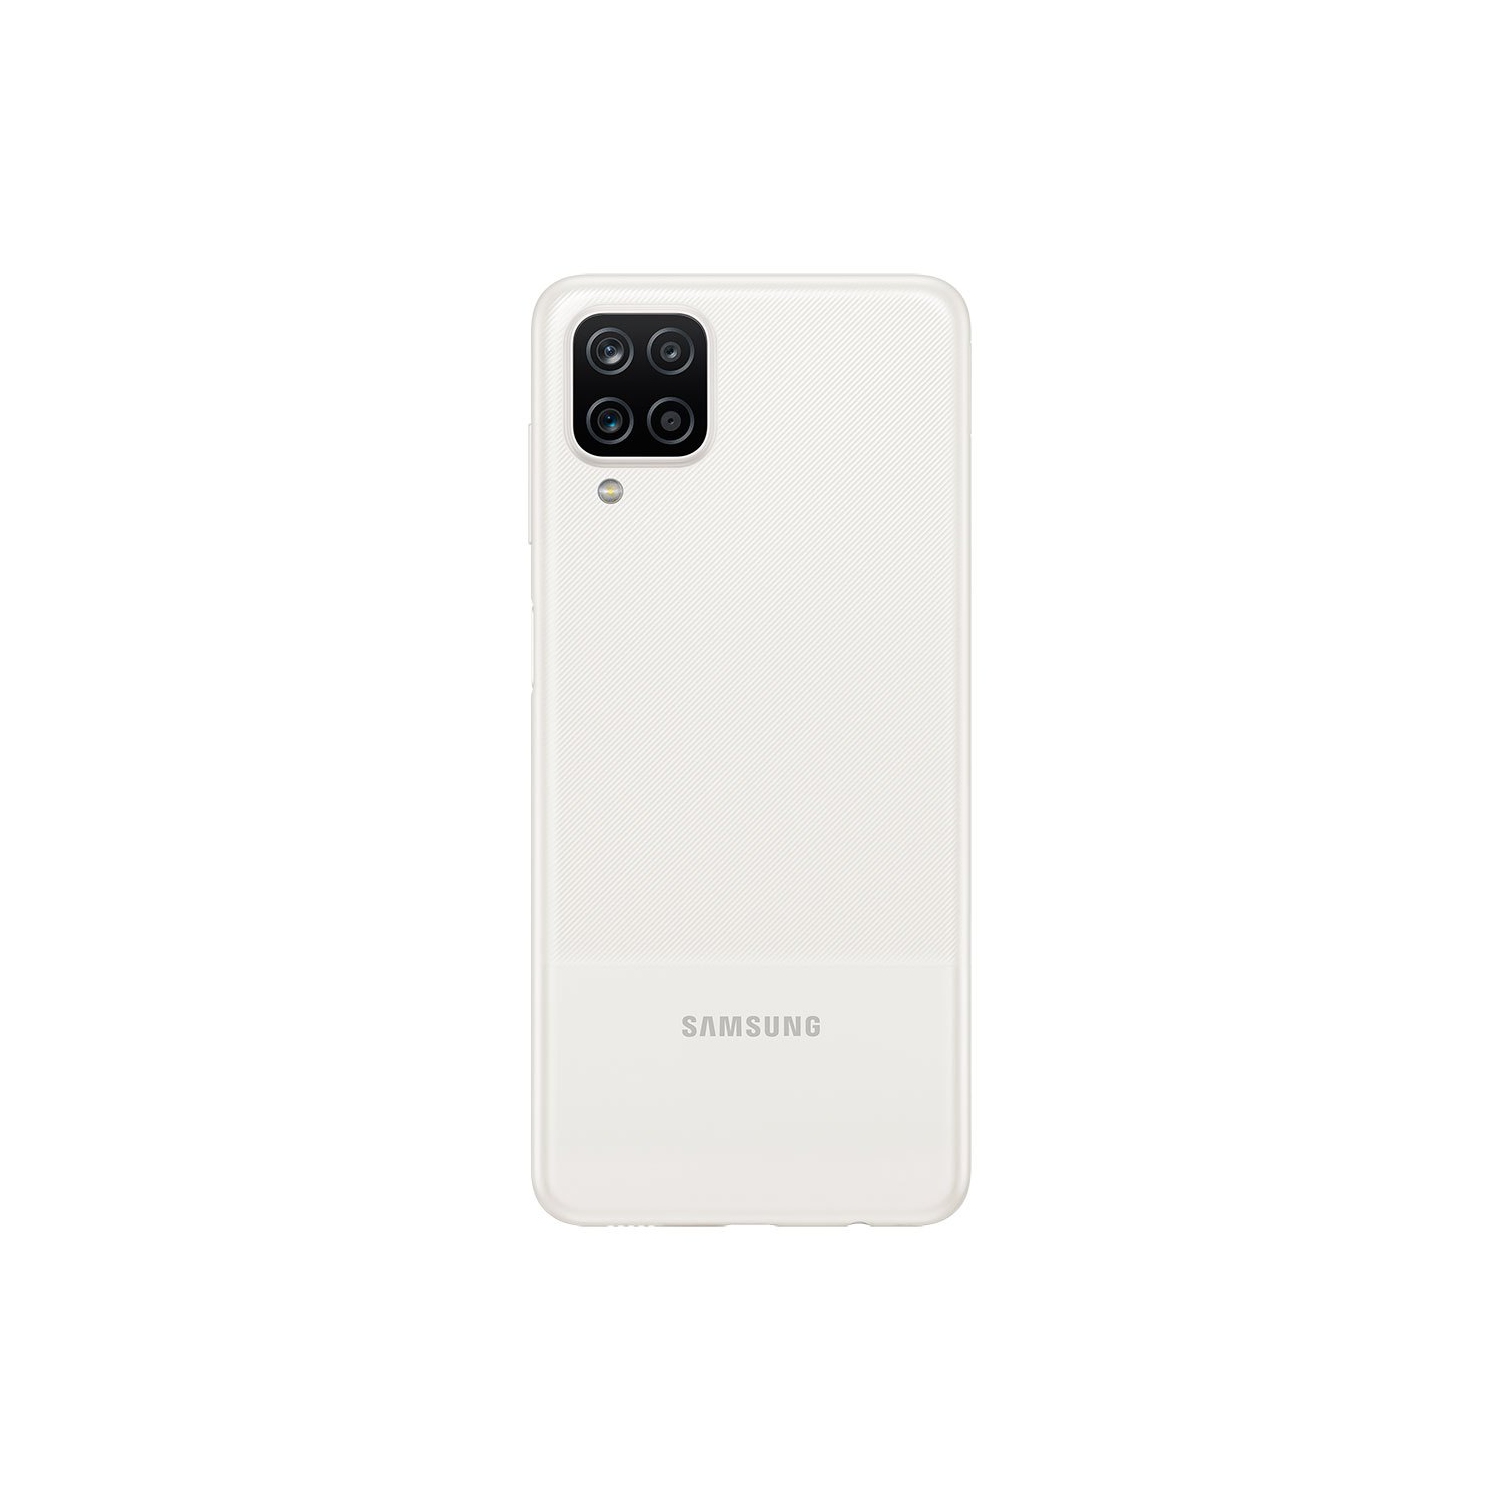 Samsung Galaxy A12 A125F-DS (64GB/4GB, White) - Brand New